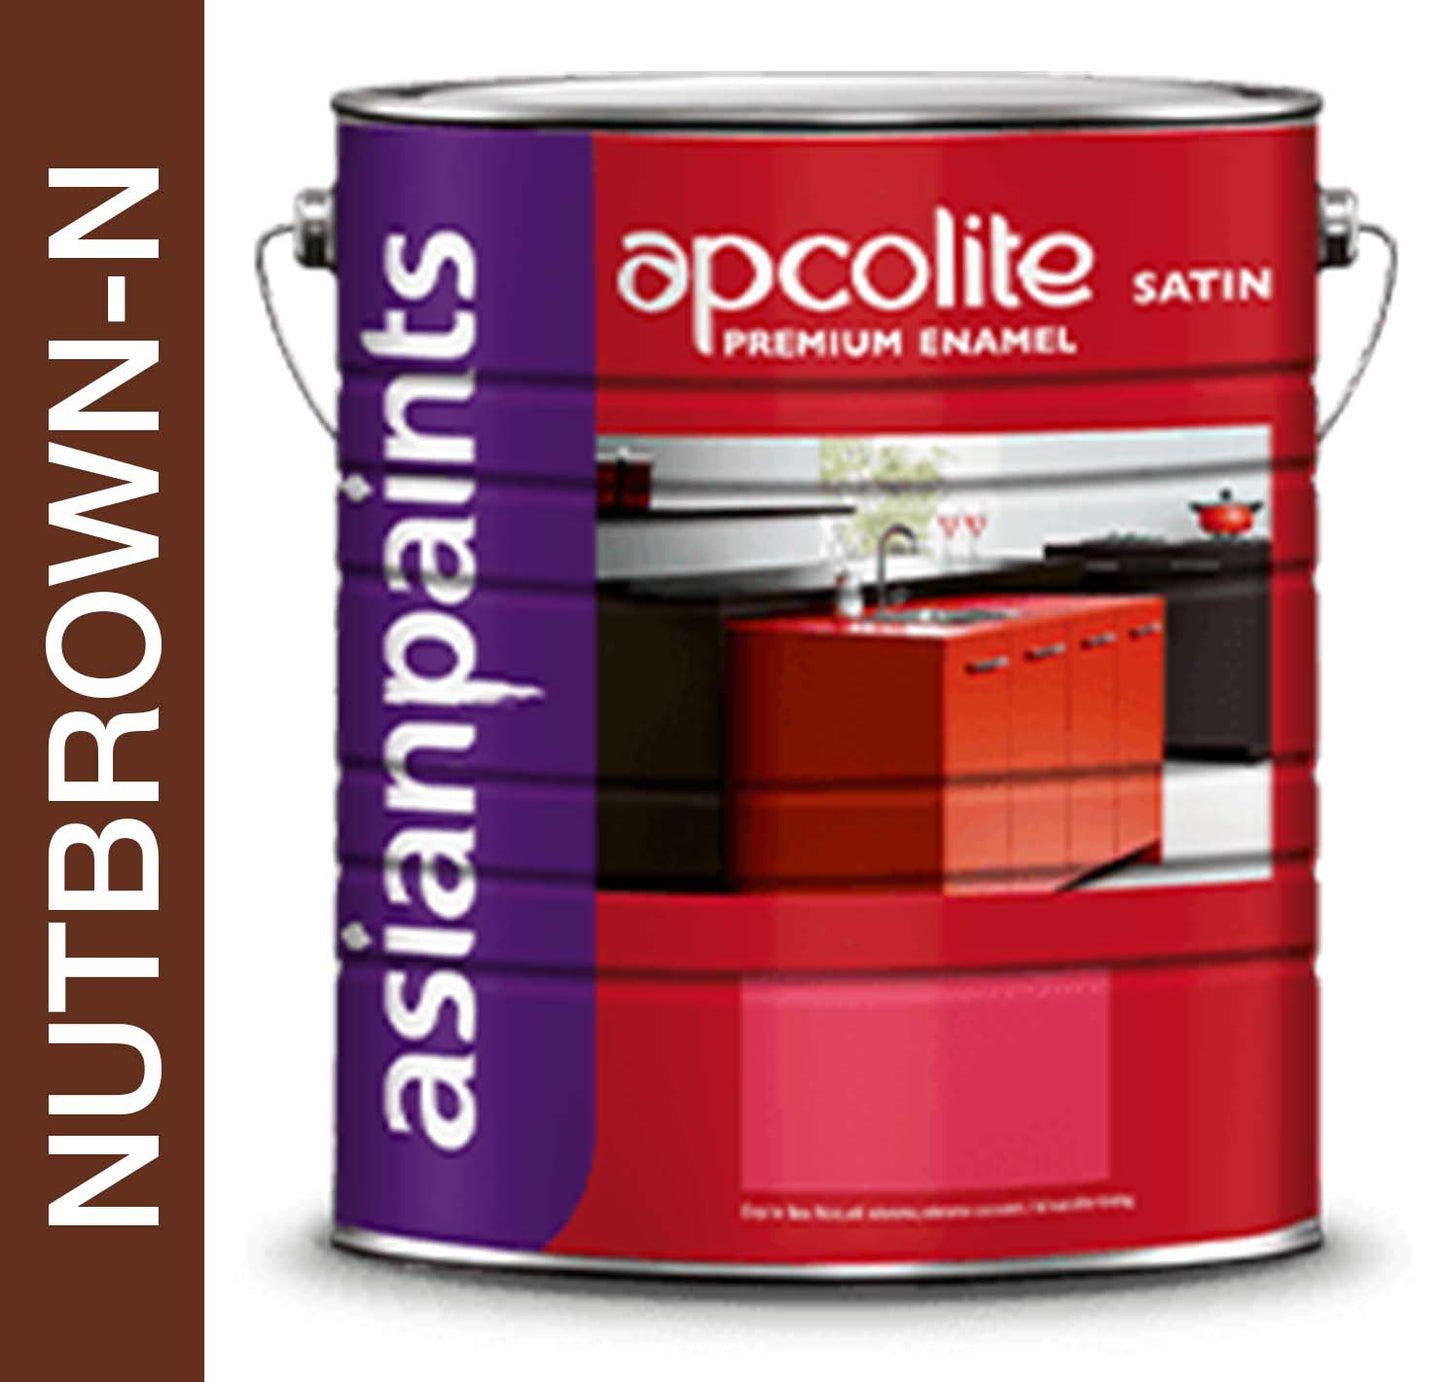 Asian Paints Apcolite Satin Premium Enamel - Nutbrown-N